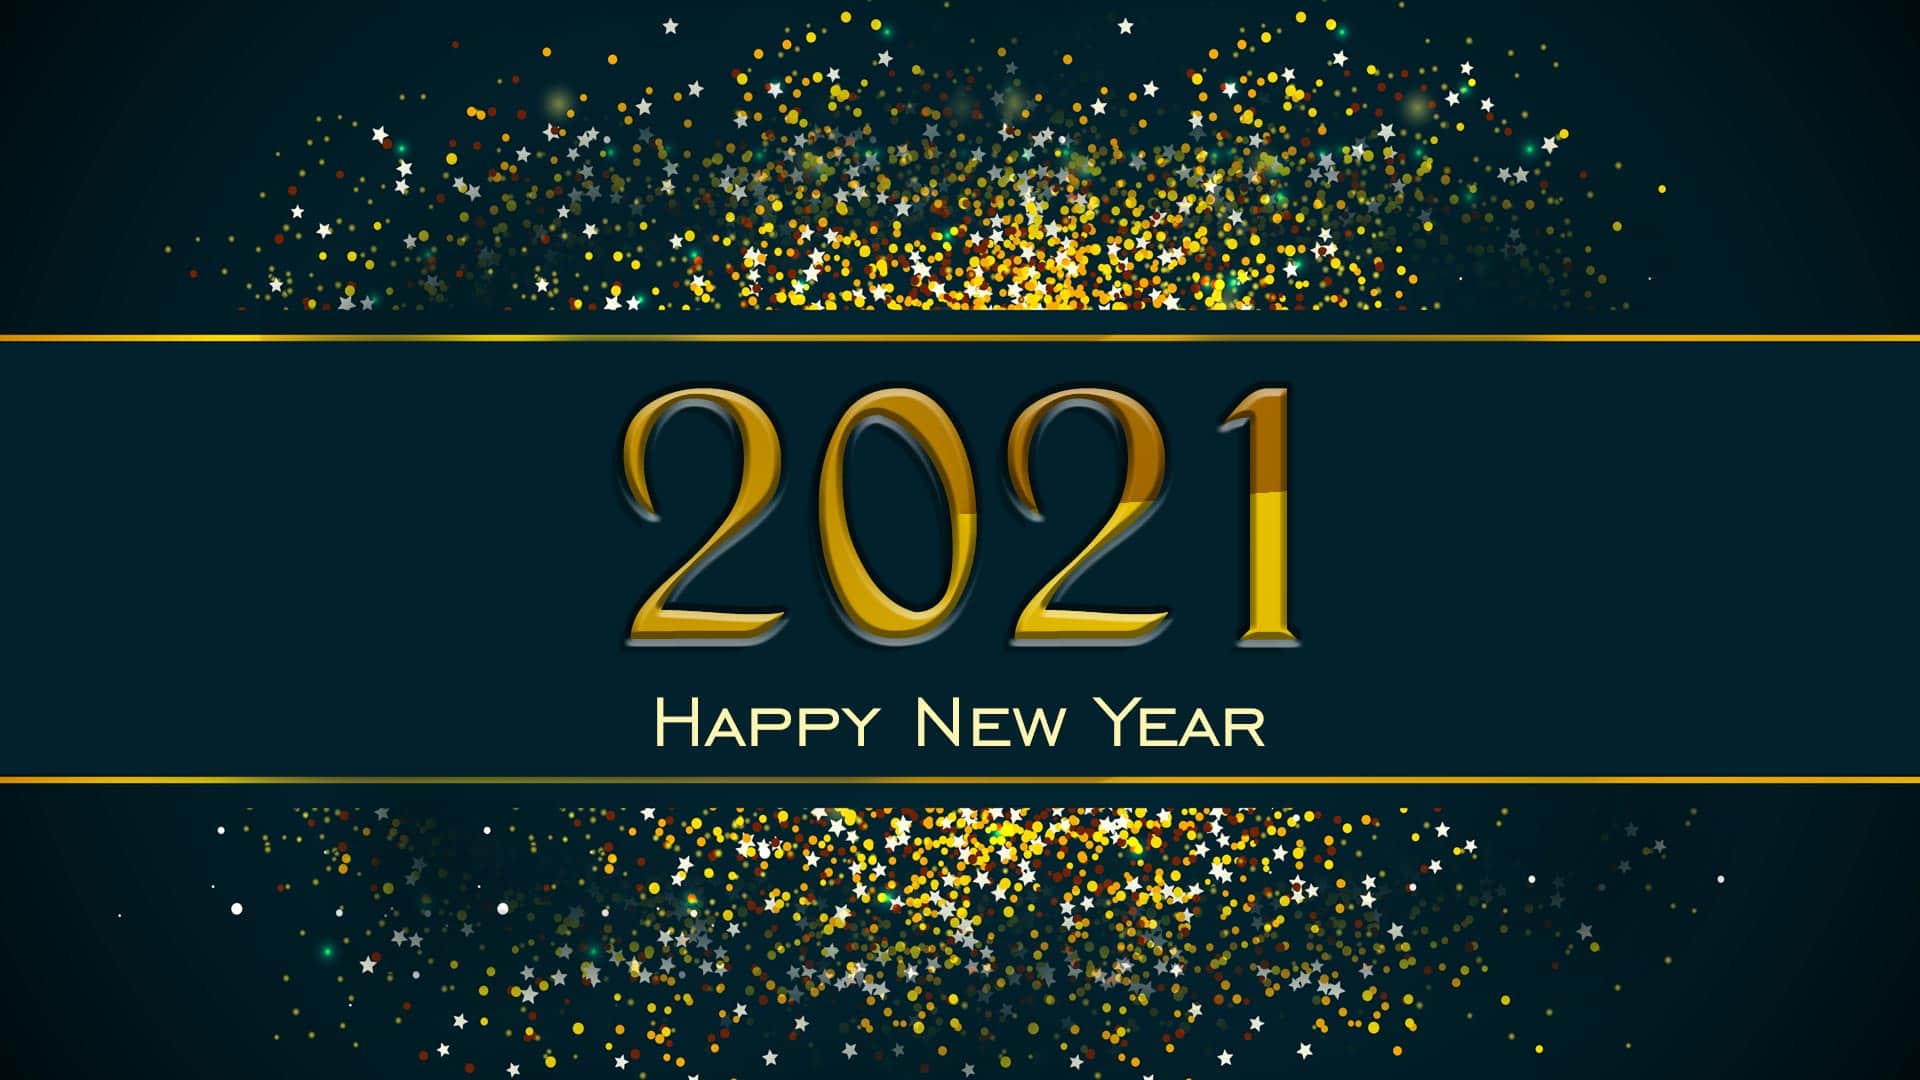 2021 Desktop Wallpaper Free Download Image ID 5